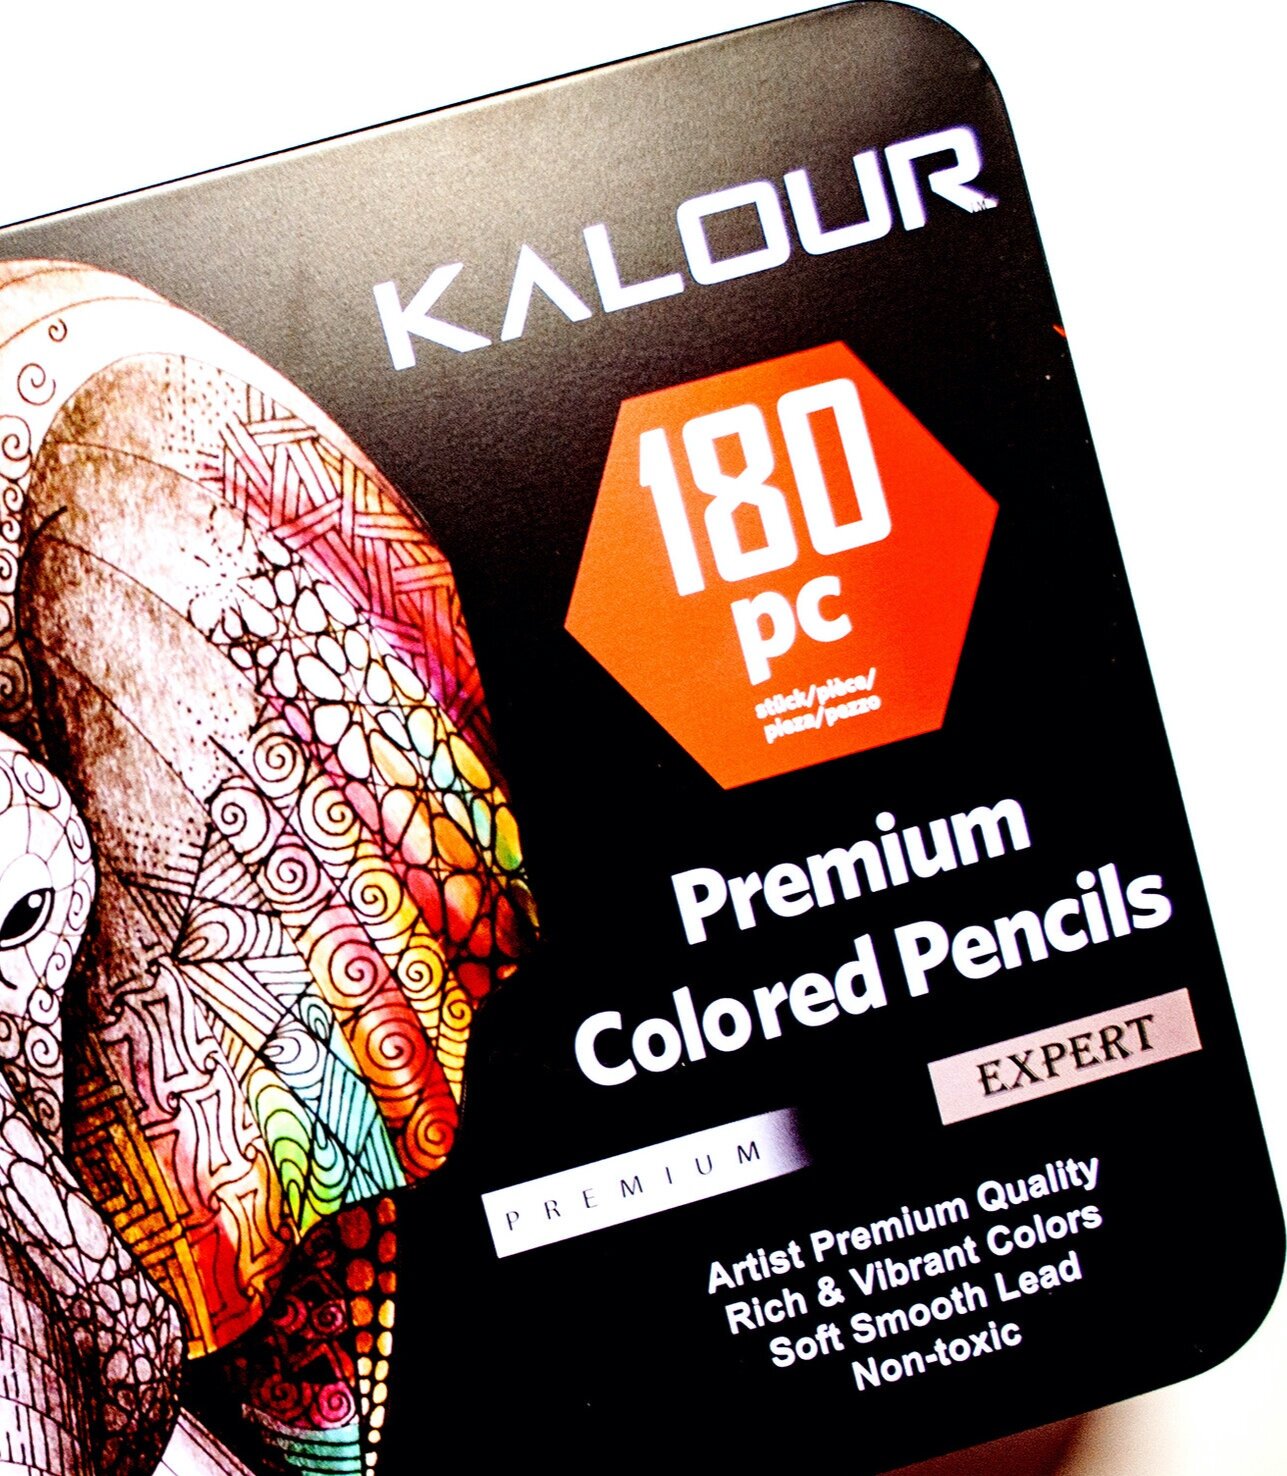 Kalour 180 Set Of Colored Pencil Review — The Art Gear Guide